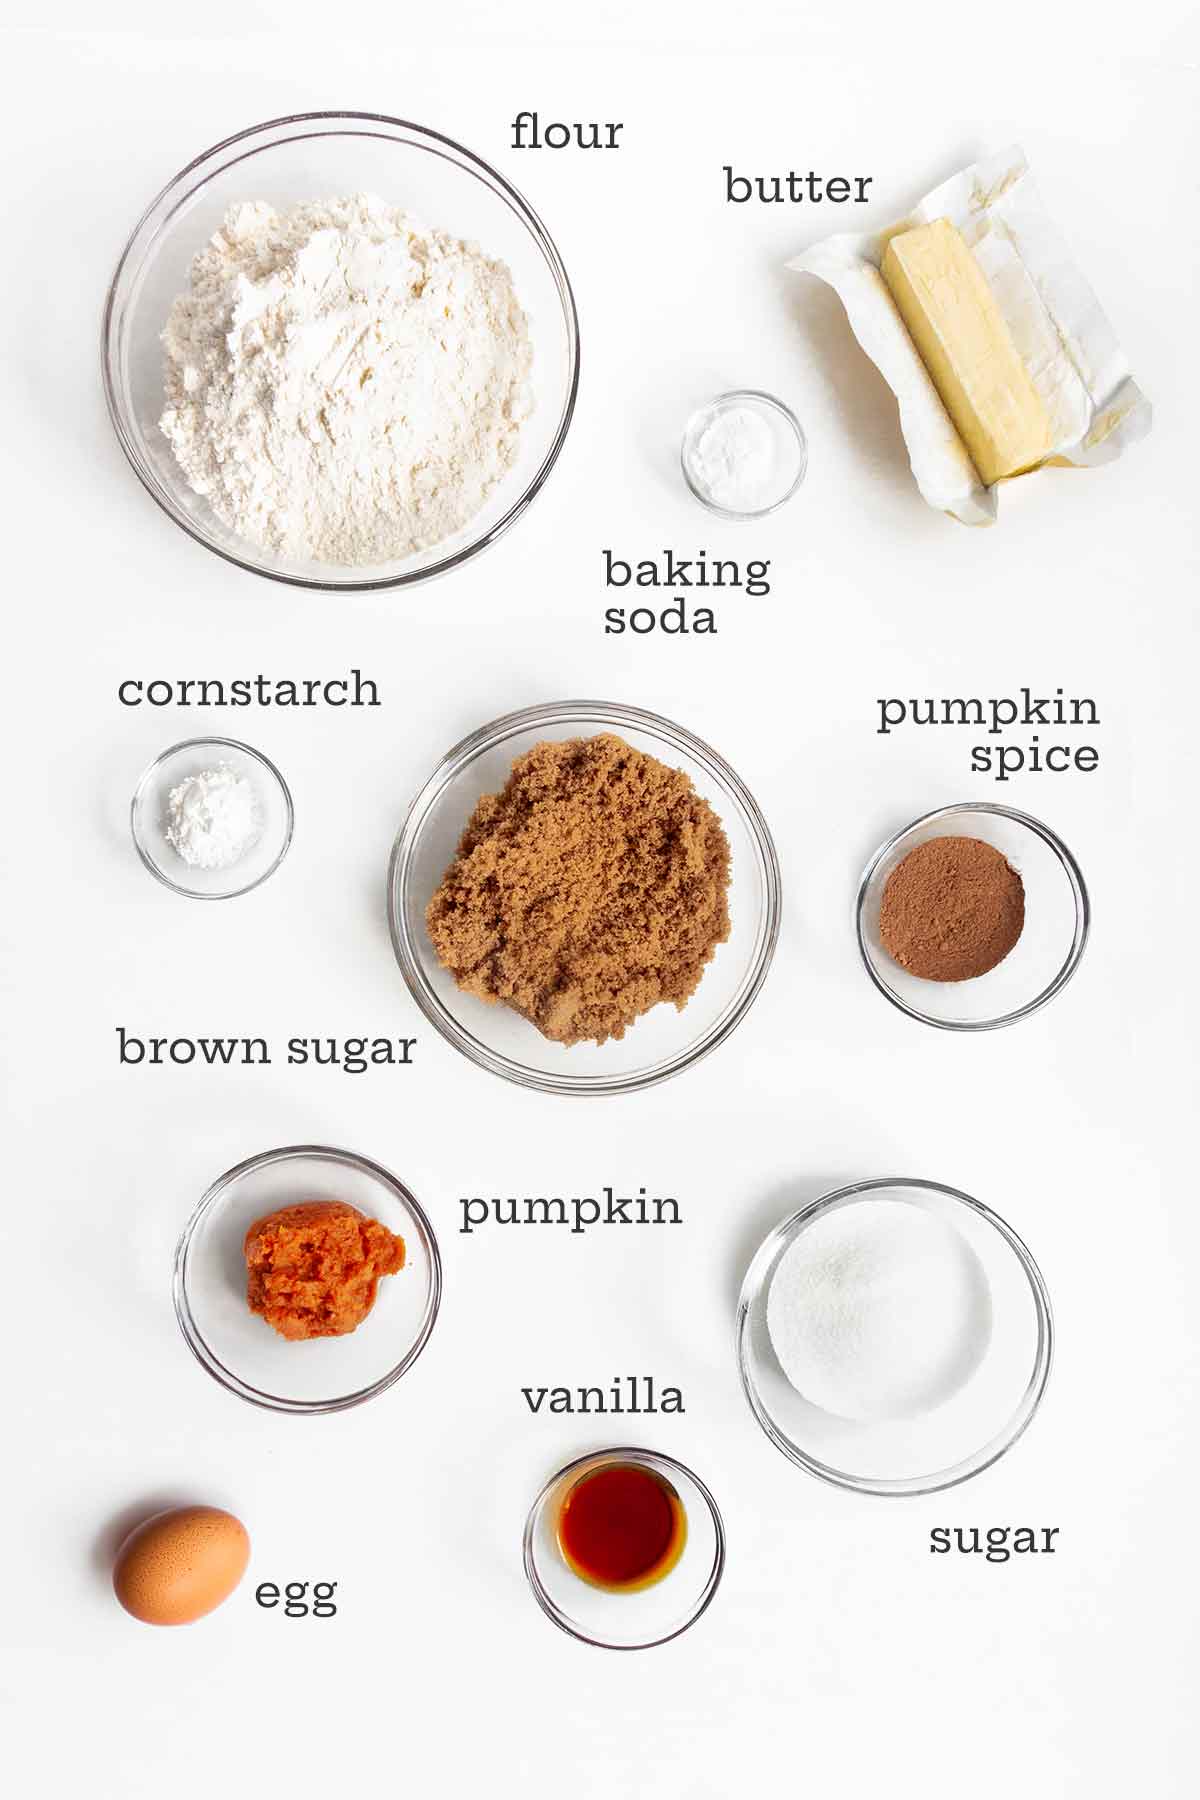 Ingredients for pumpkin spice cookies--pumpkin, spices, sugar, flour, butter, egg, baking soda, and cornstarch.